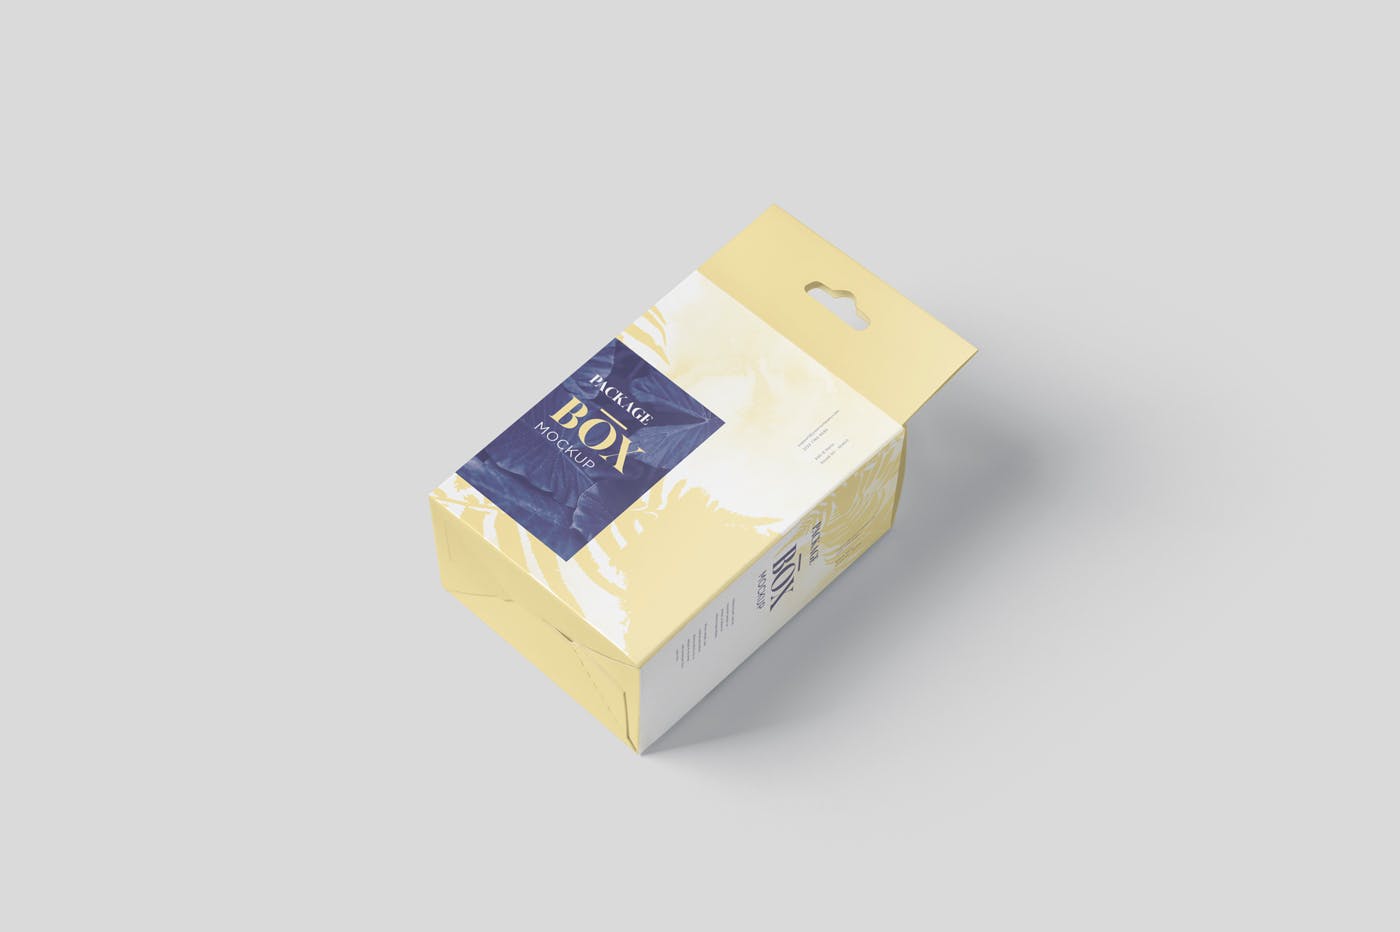 挂耳式扁平矩形包装盒普贤居精选模板 Package Box Mockup Set – Slim Square with Hanger插图(5)